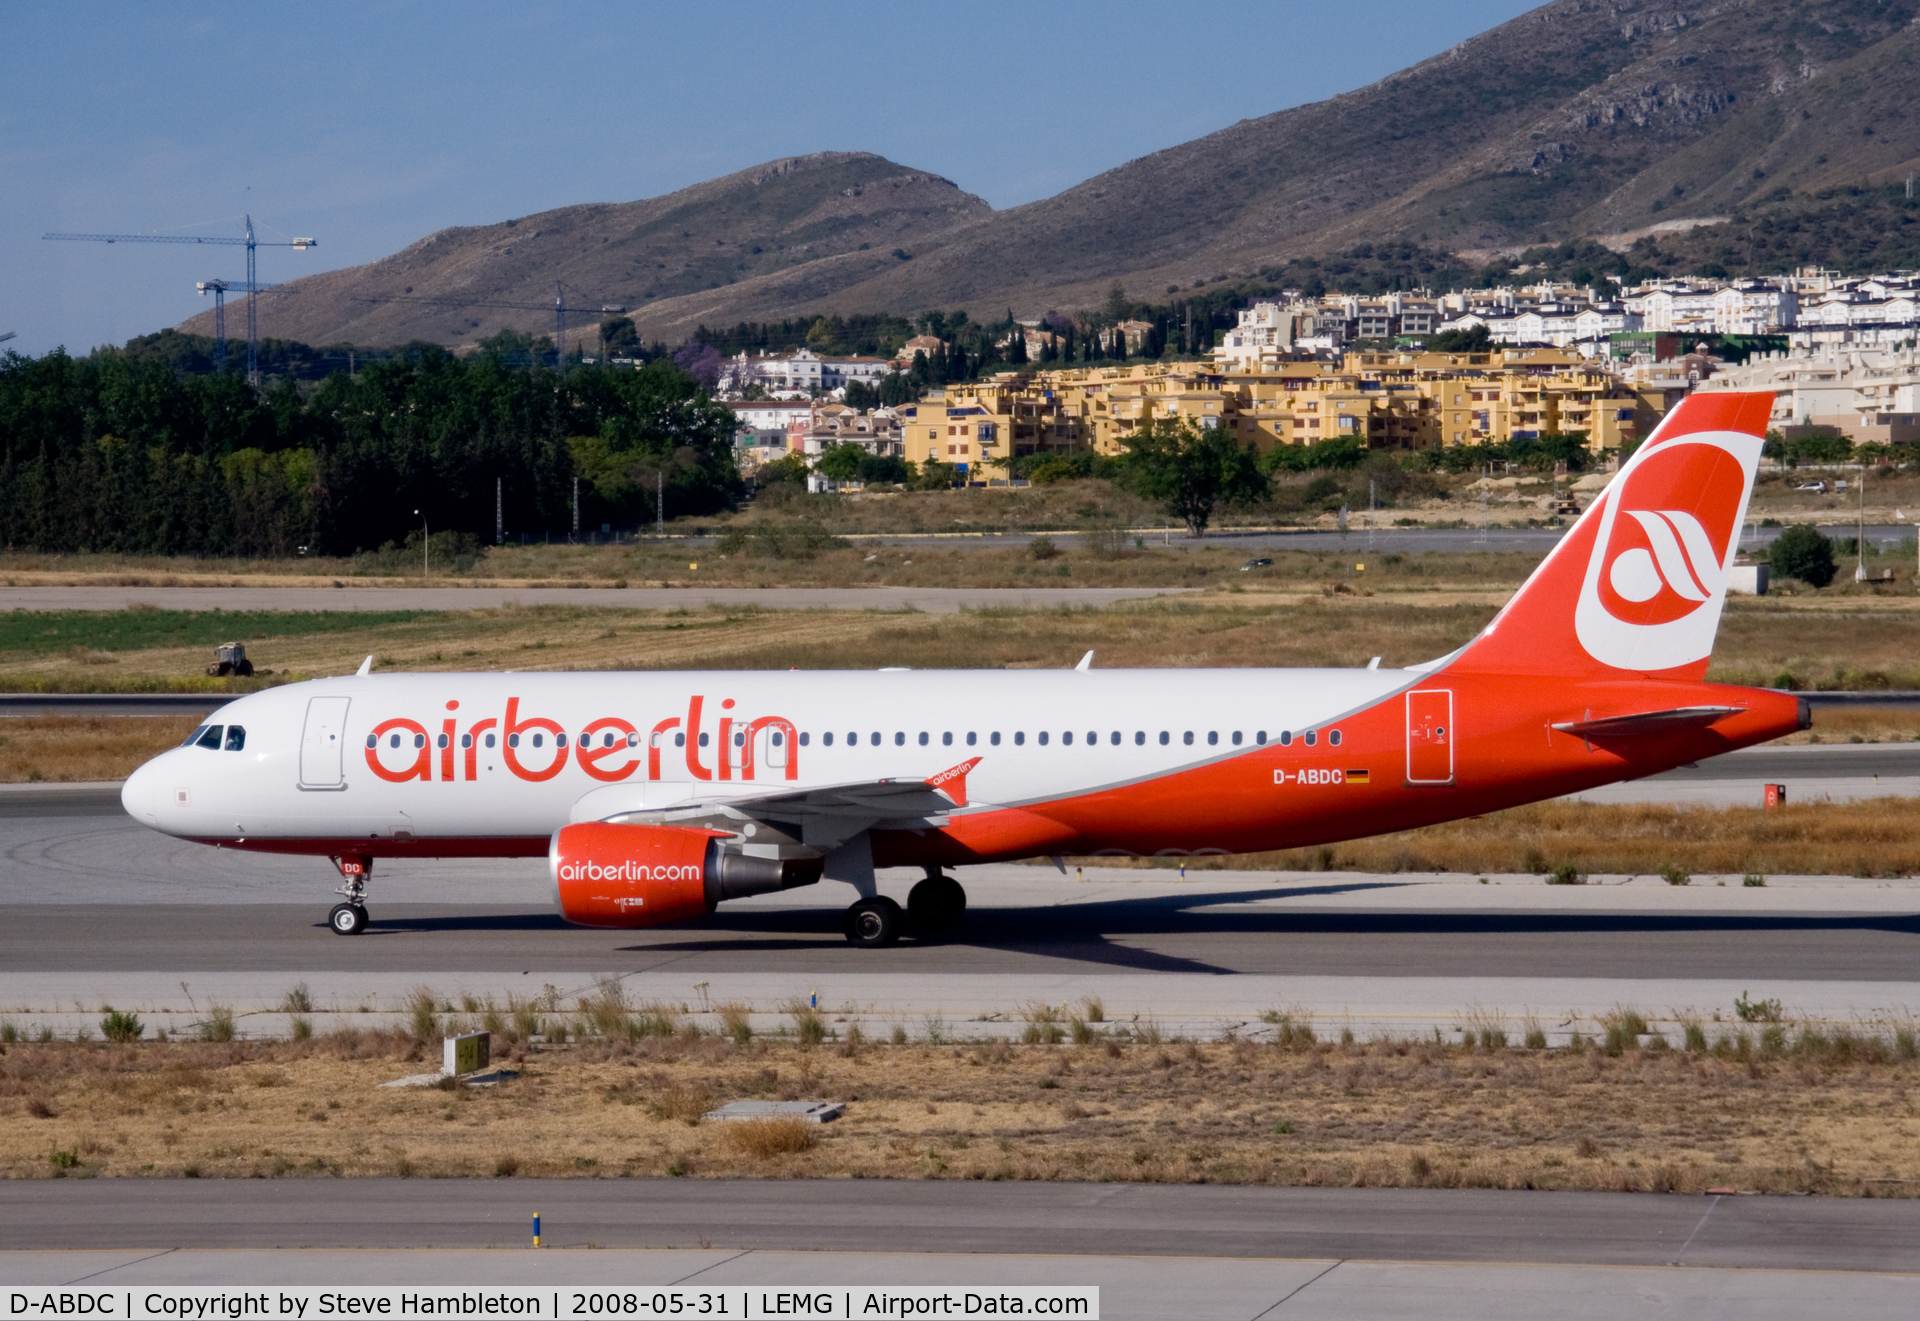 D-ABDC, 2005 Airbus A320-214 C/N 2654, Air Berlin A320 taxiing to the gate at Malaga